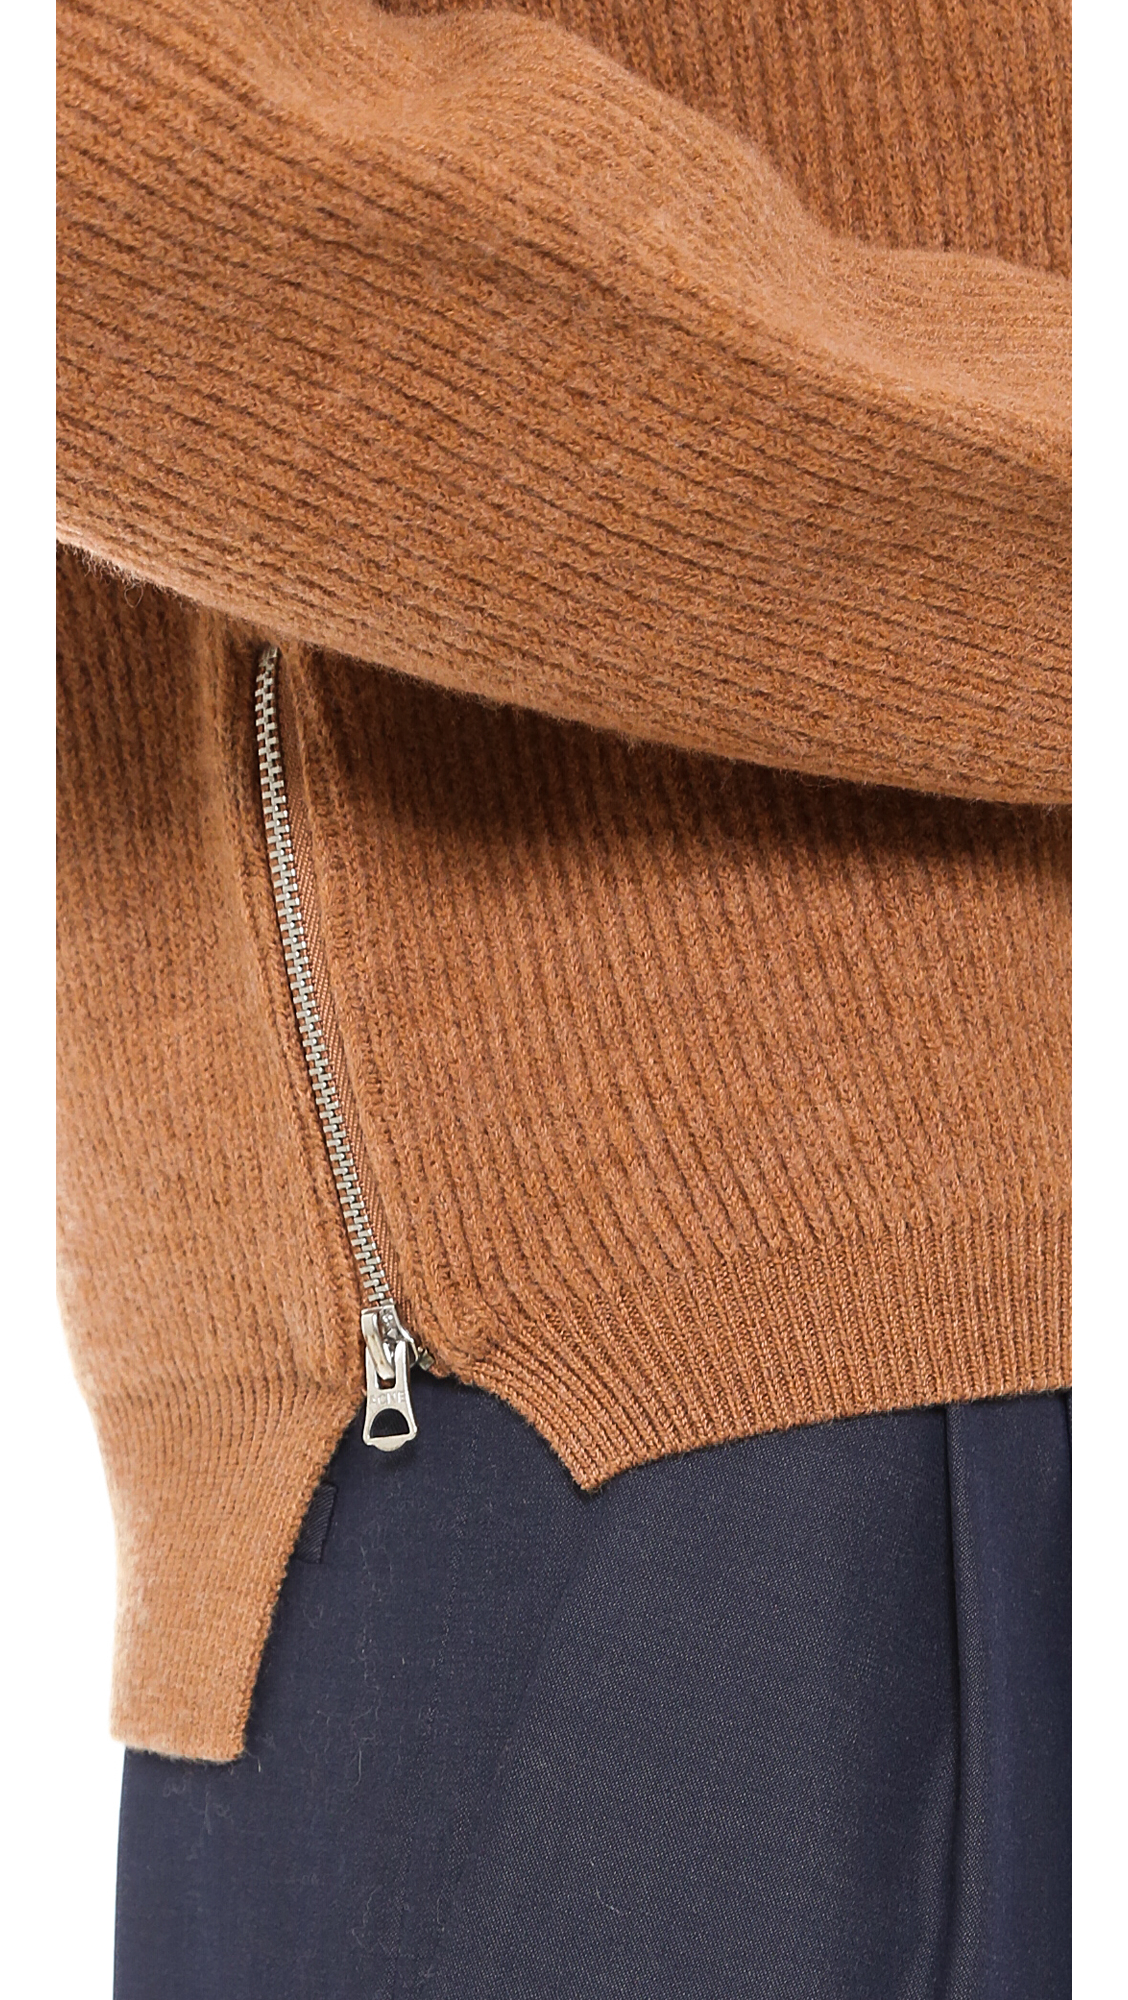 Acne Studios Misty Boiled Wool Zip Sweater - Camel in Brown | Lyst